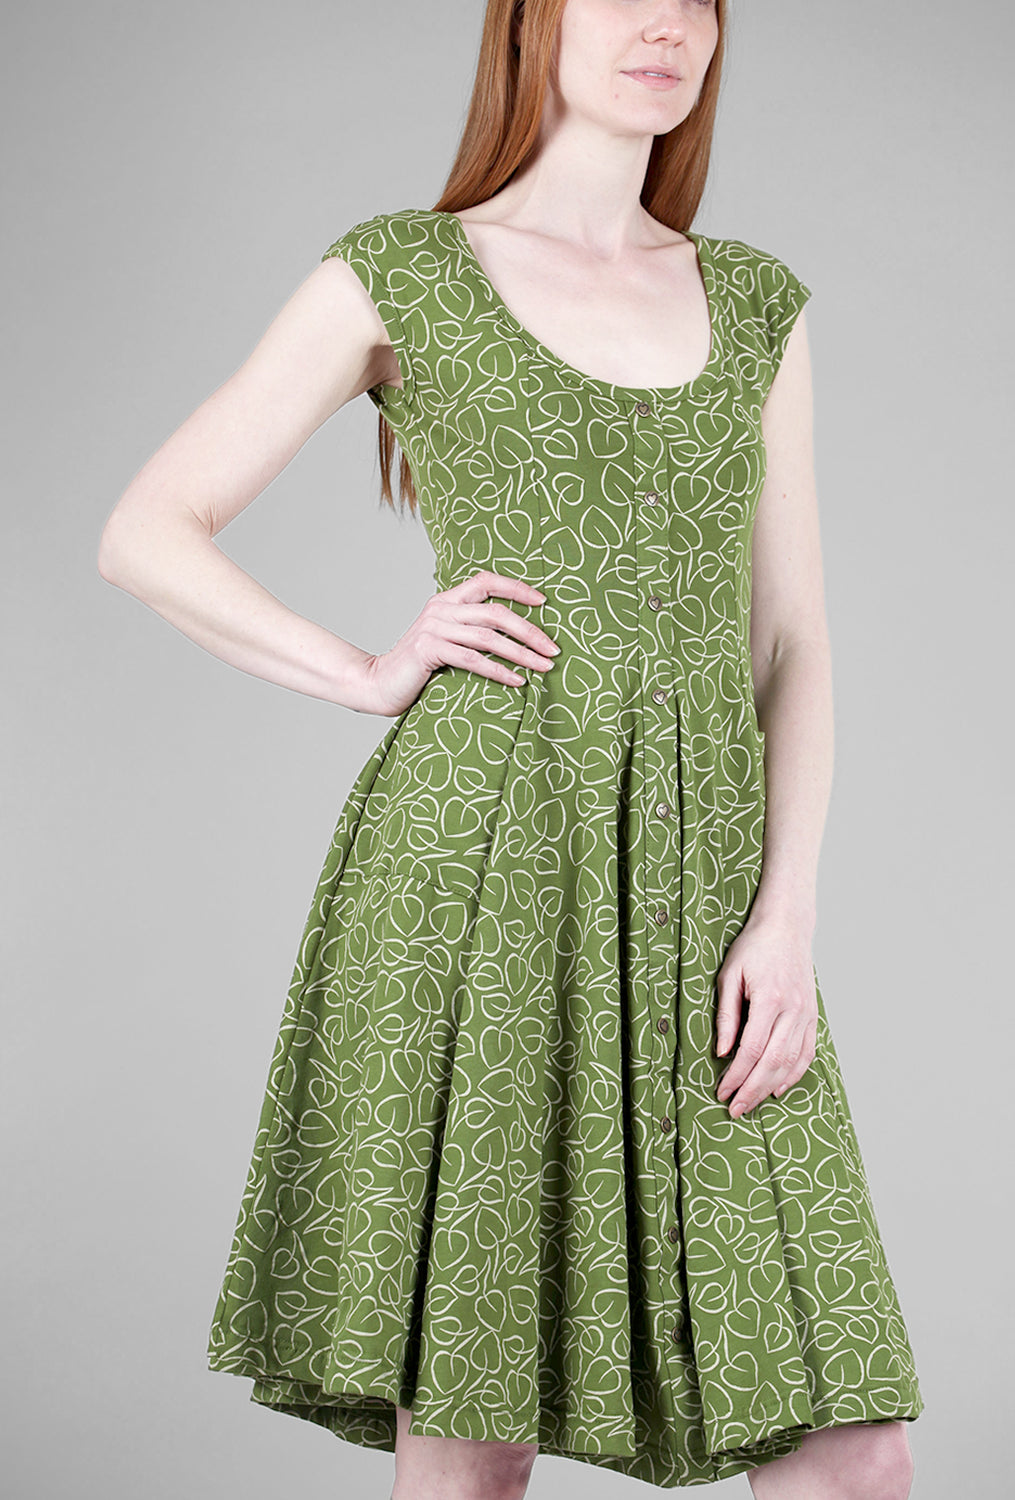 Capitola Dress, Houseplant Print